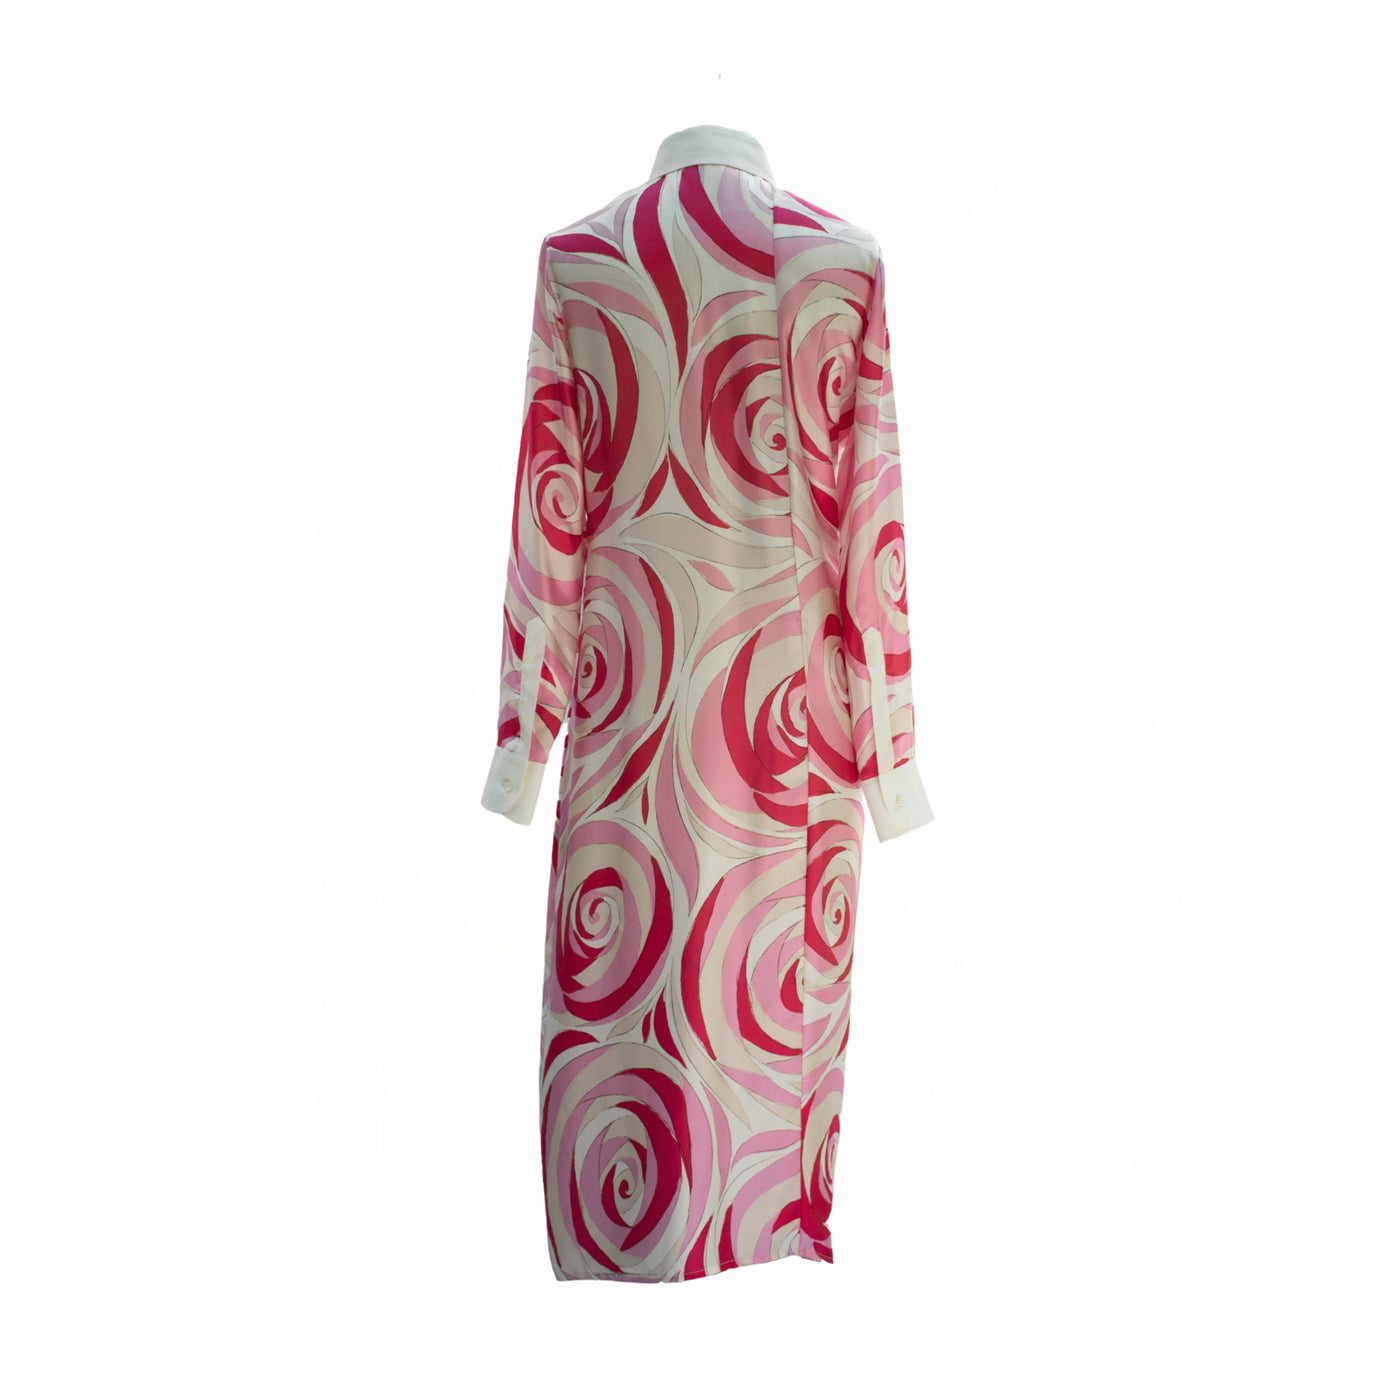 Rubino Gaeta Peony Print Dress